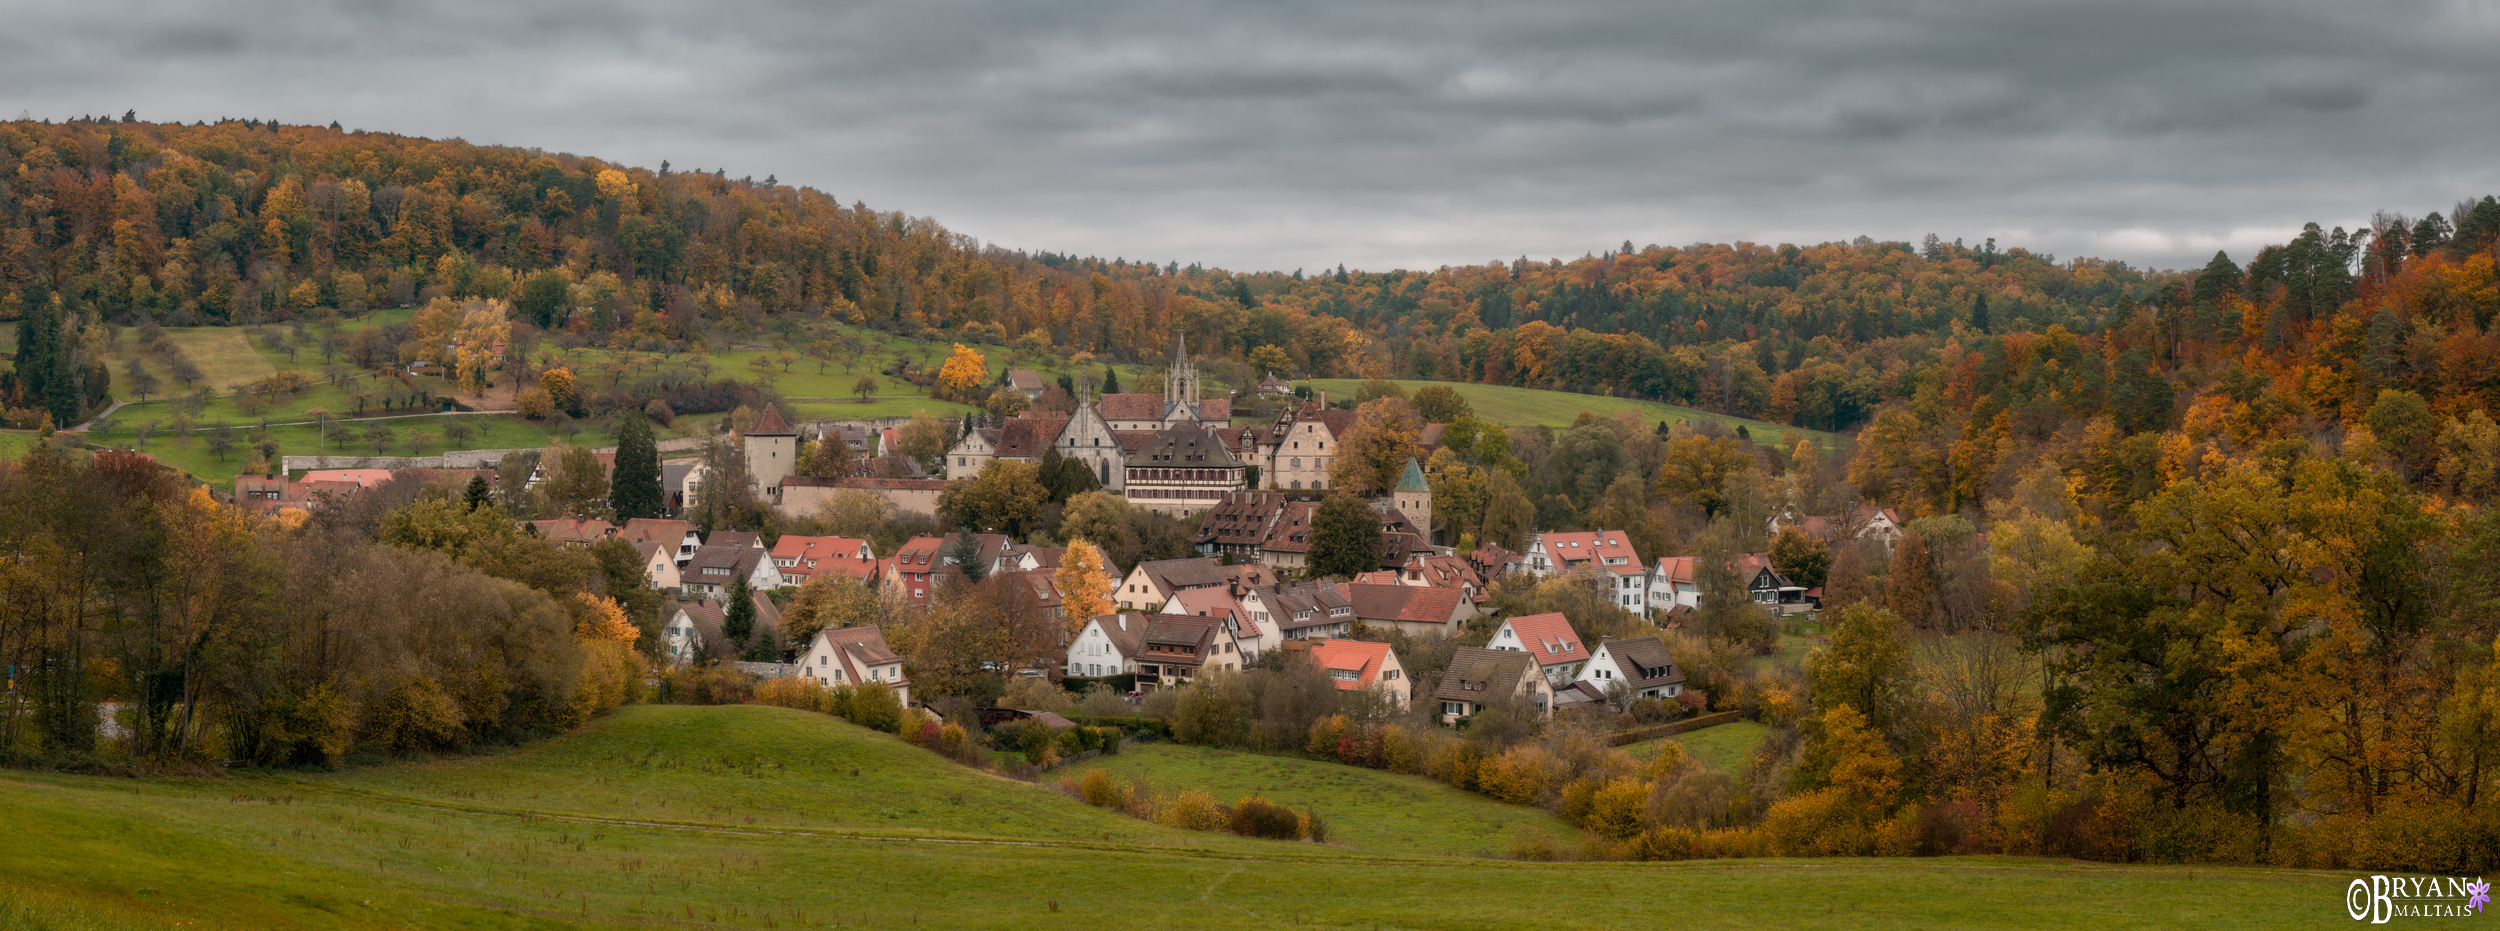 Bebenhausen Herbst farben Panorama